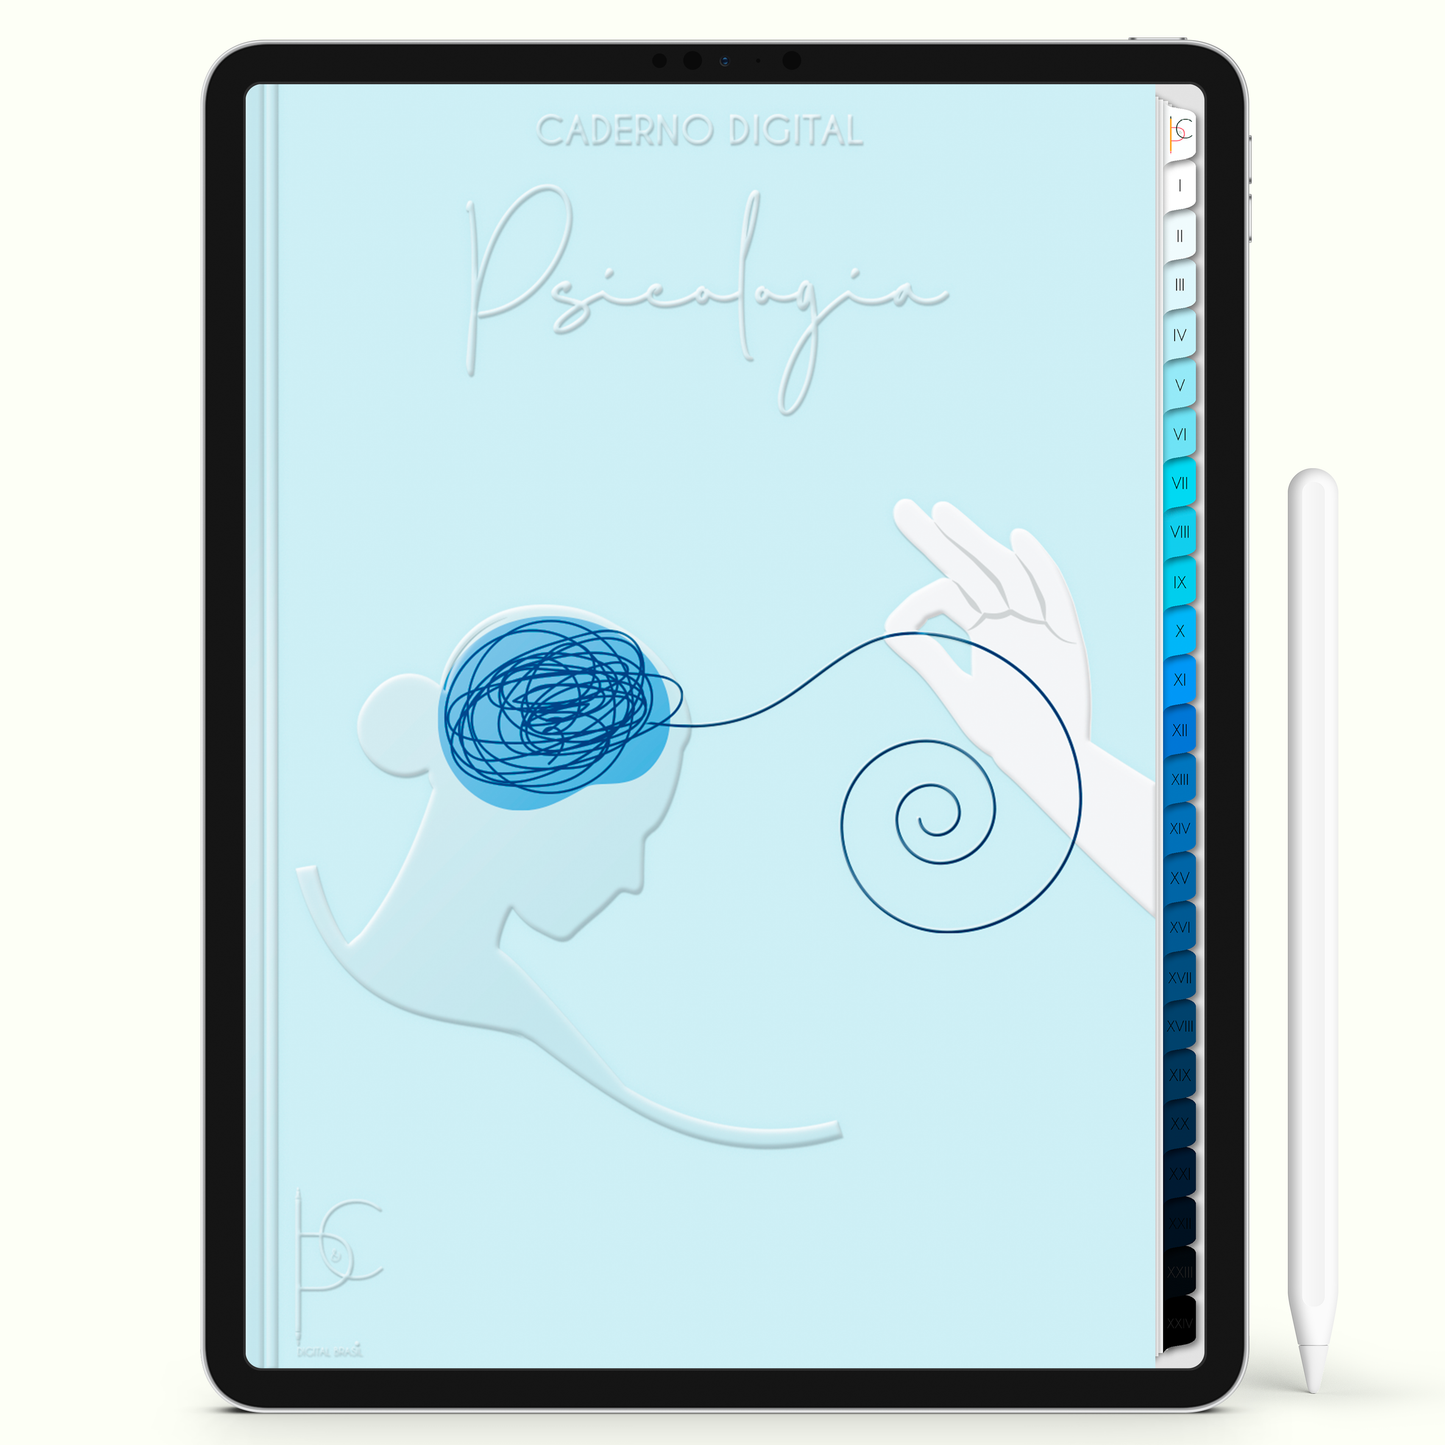 Caderno Digital 24 Matérias - Psicologia, para ipad e tablet android. Cadernos & Planner Digital Brasil